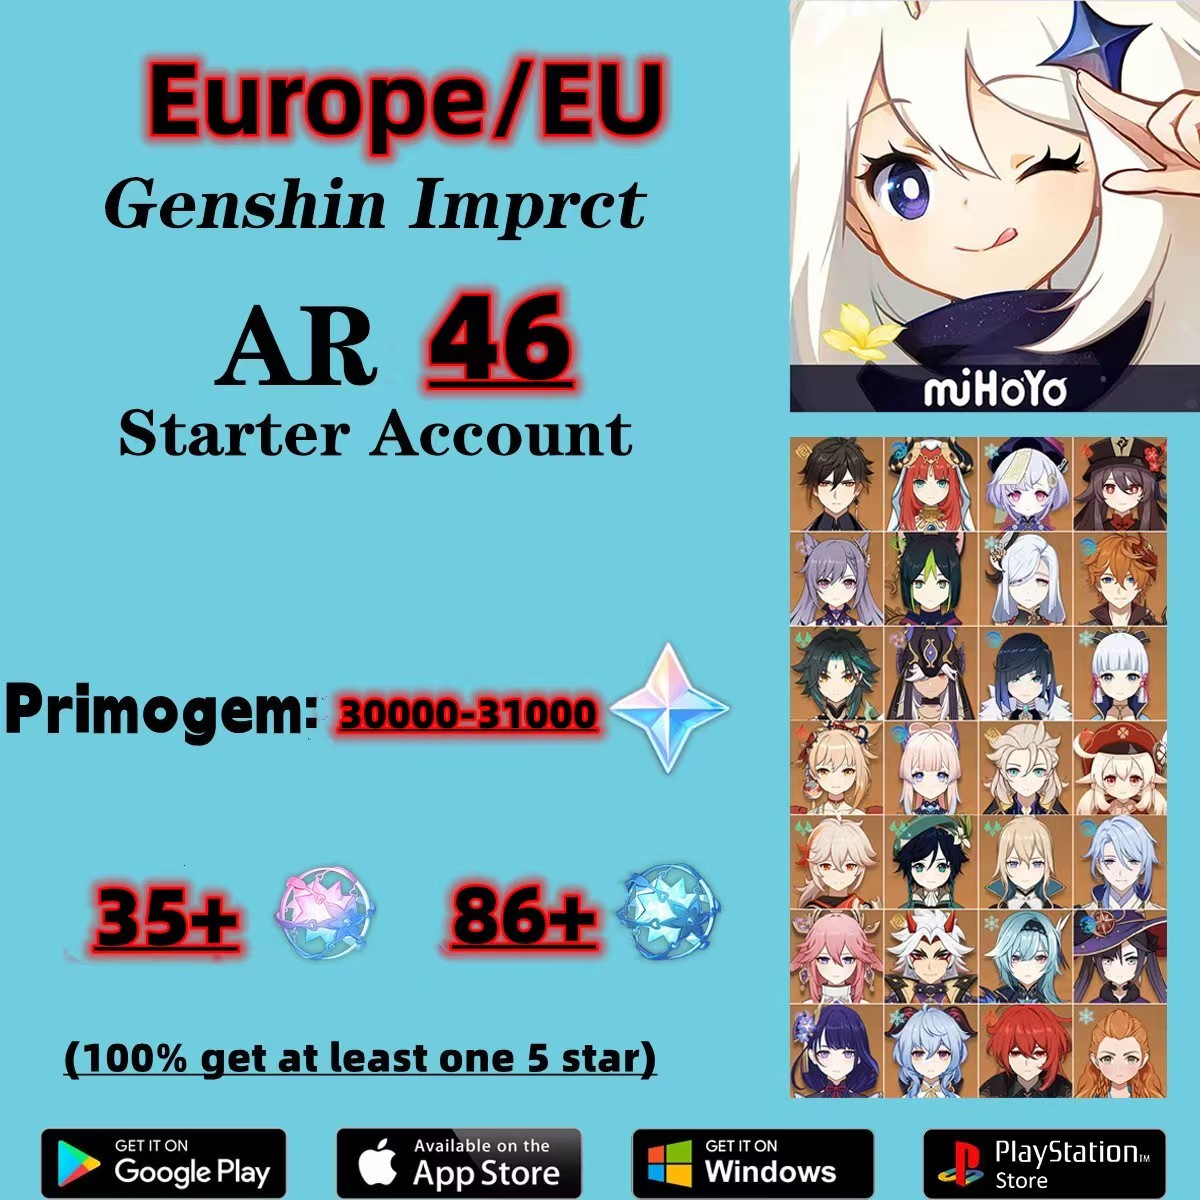 EU|AR46|Guarantee300+Wishes|Genshin Impact account|Primogem30000+|Interwined Fate 35|Acquaint Fate 86/#F75